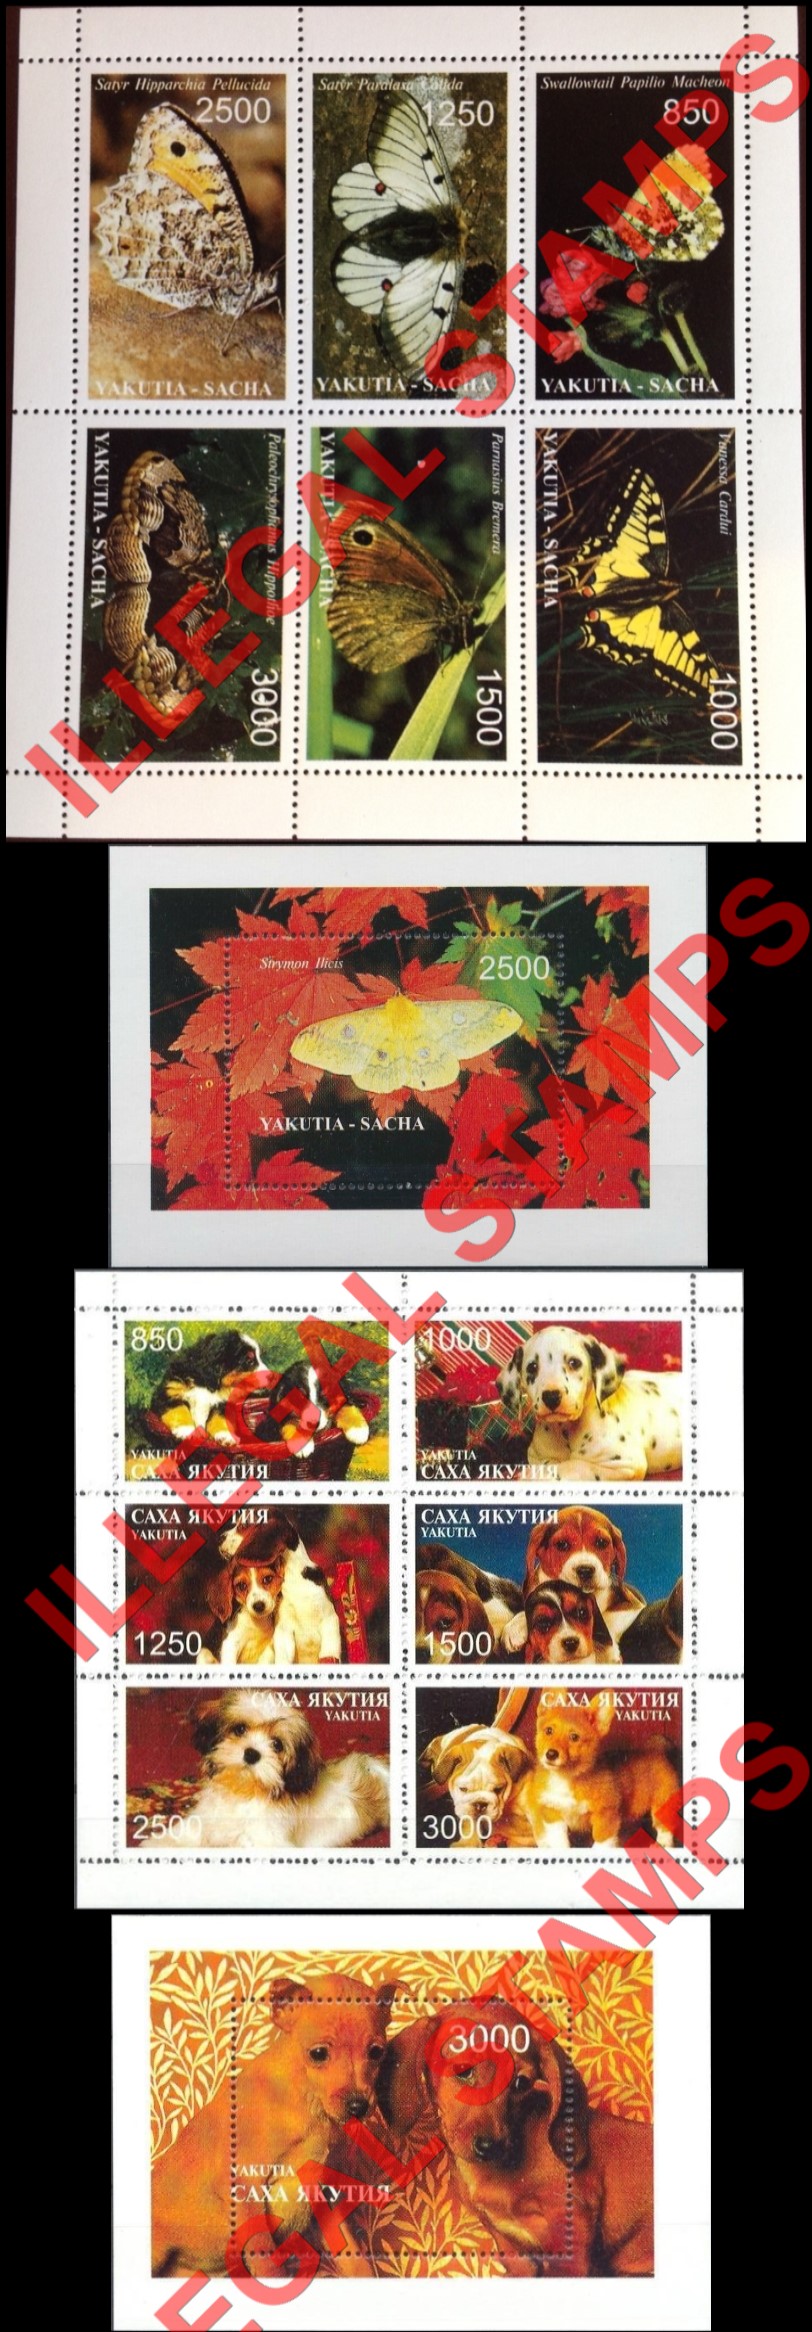 Republic of Sakha Yakutia 1997 Counterfeit Illegal Stamps (Part 1)